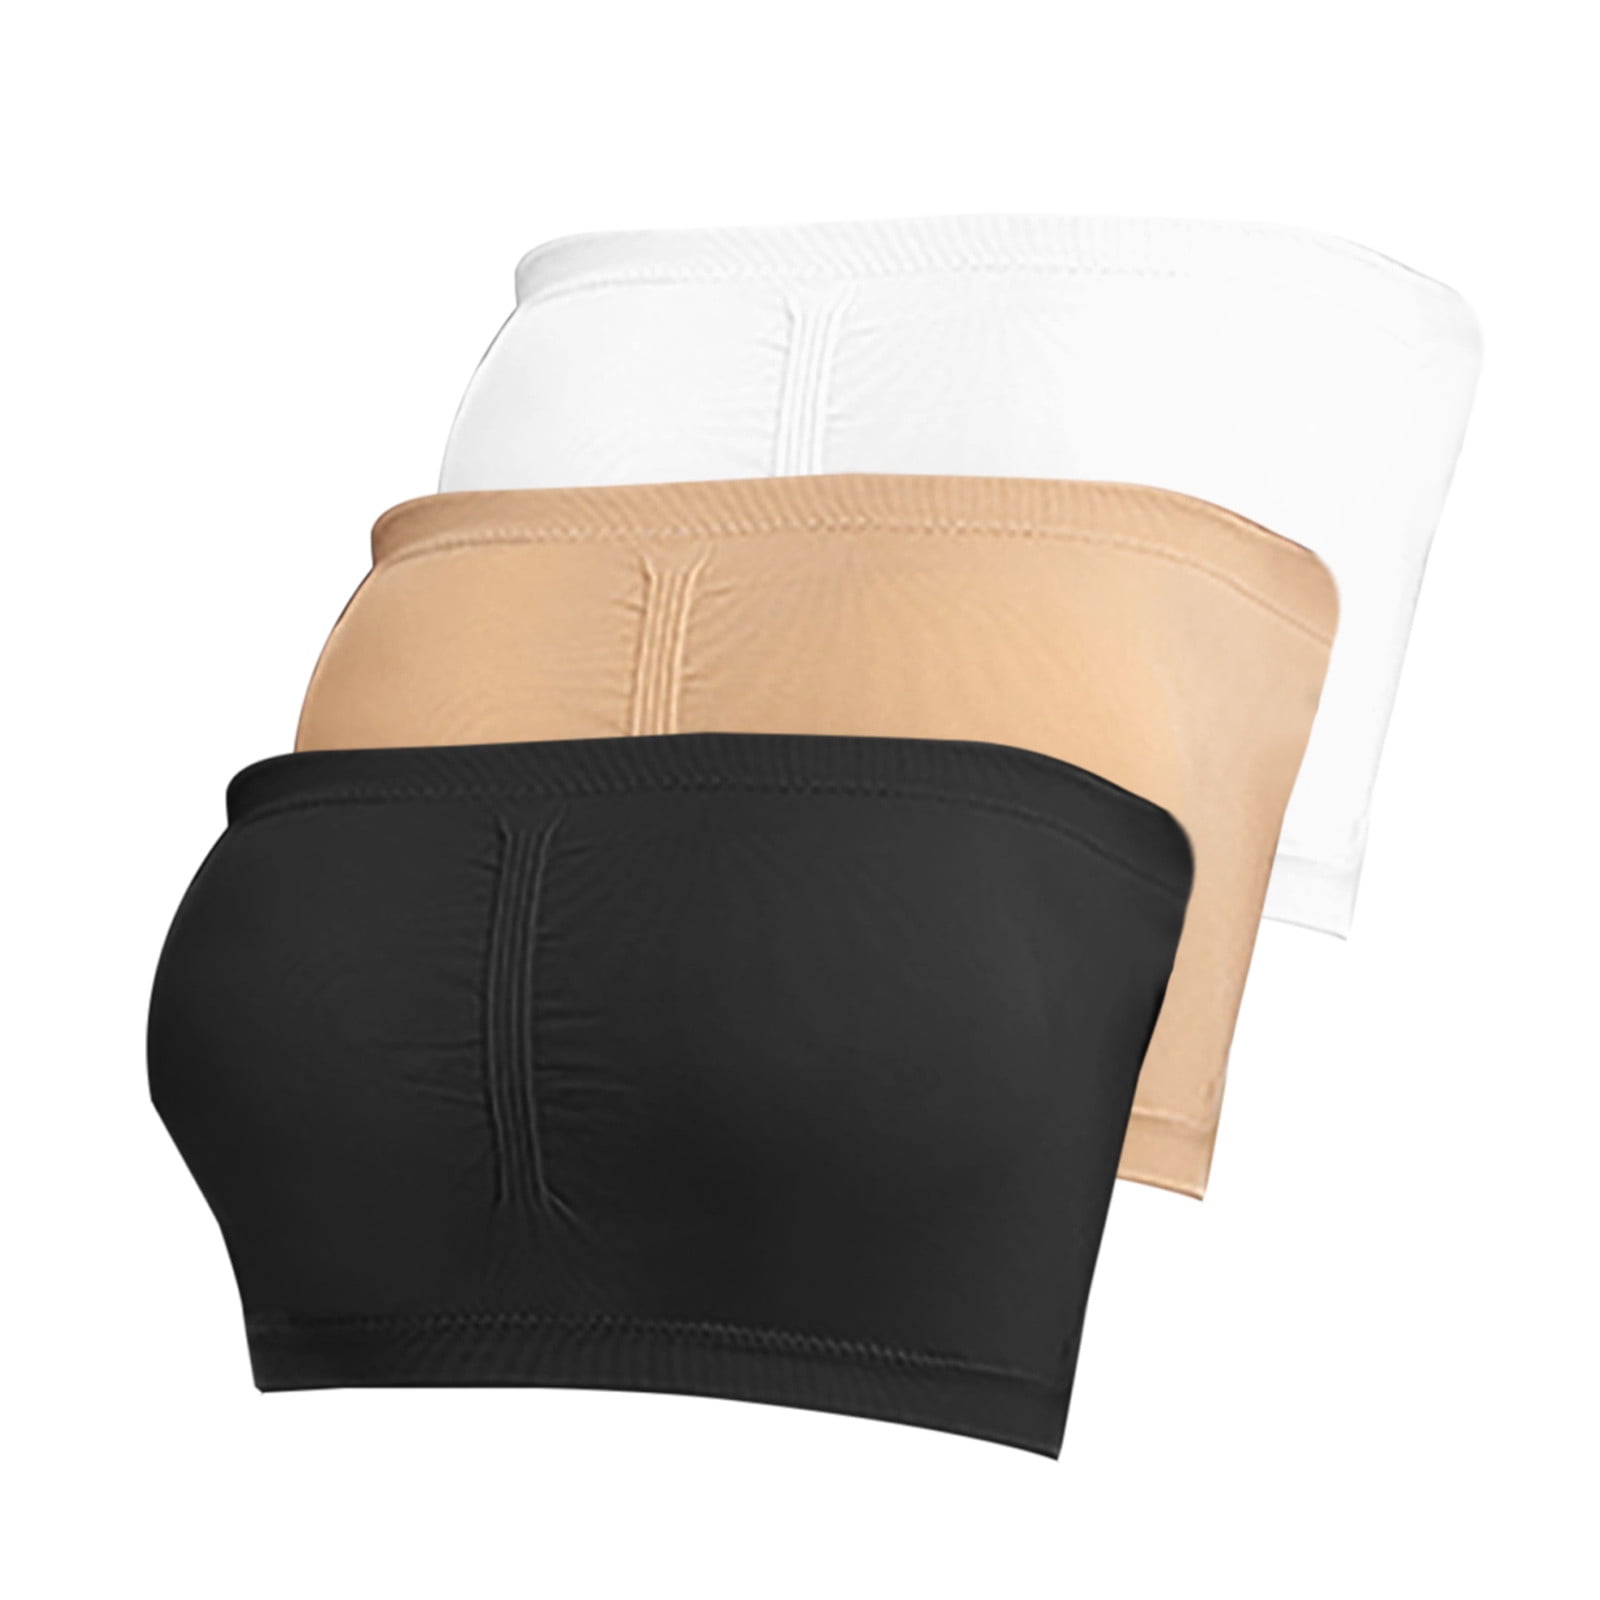 OGLCCG 2 Pack Strapless Bra for Women Bandeau Bra Plus Size Wireless Padded  Push Up Bras Seamless Tube Top Bralette for Everyday Wear